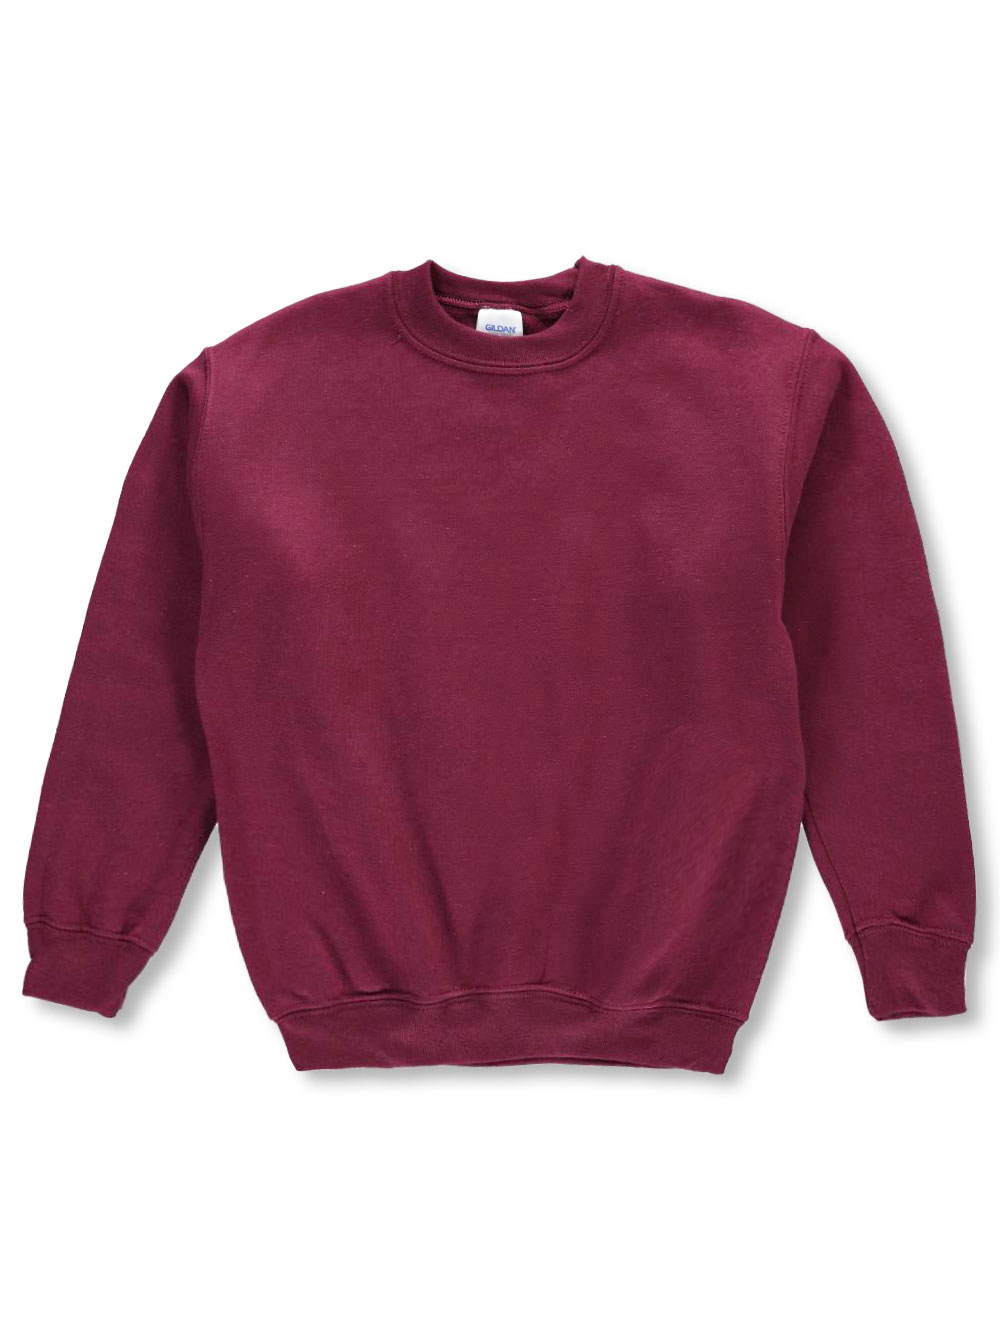 Gildan Unisex Crew Neck Sweatshirt (Youth Sizes S - XL) | eBay